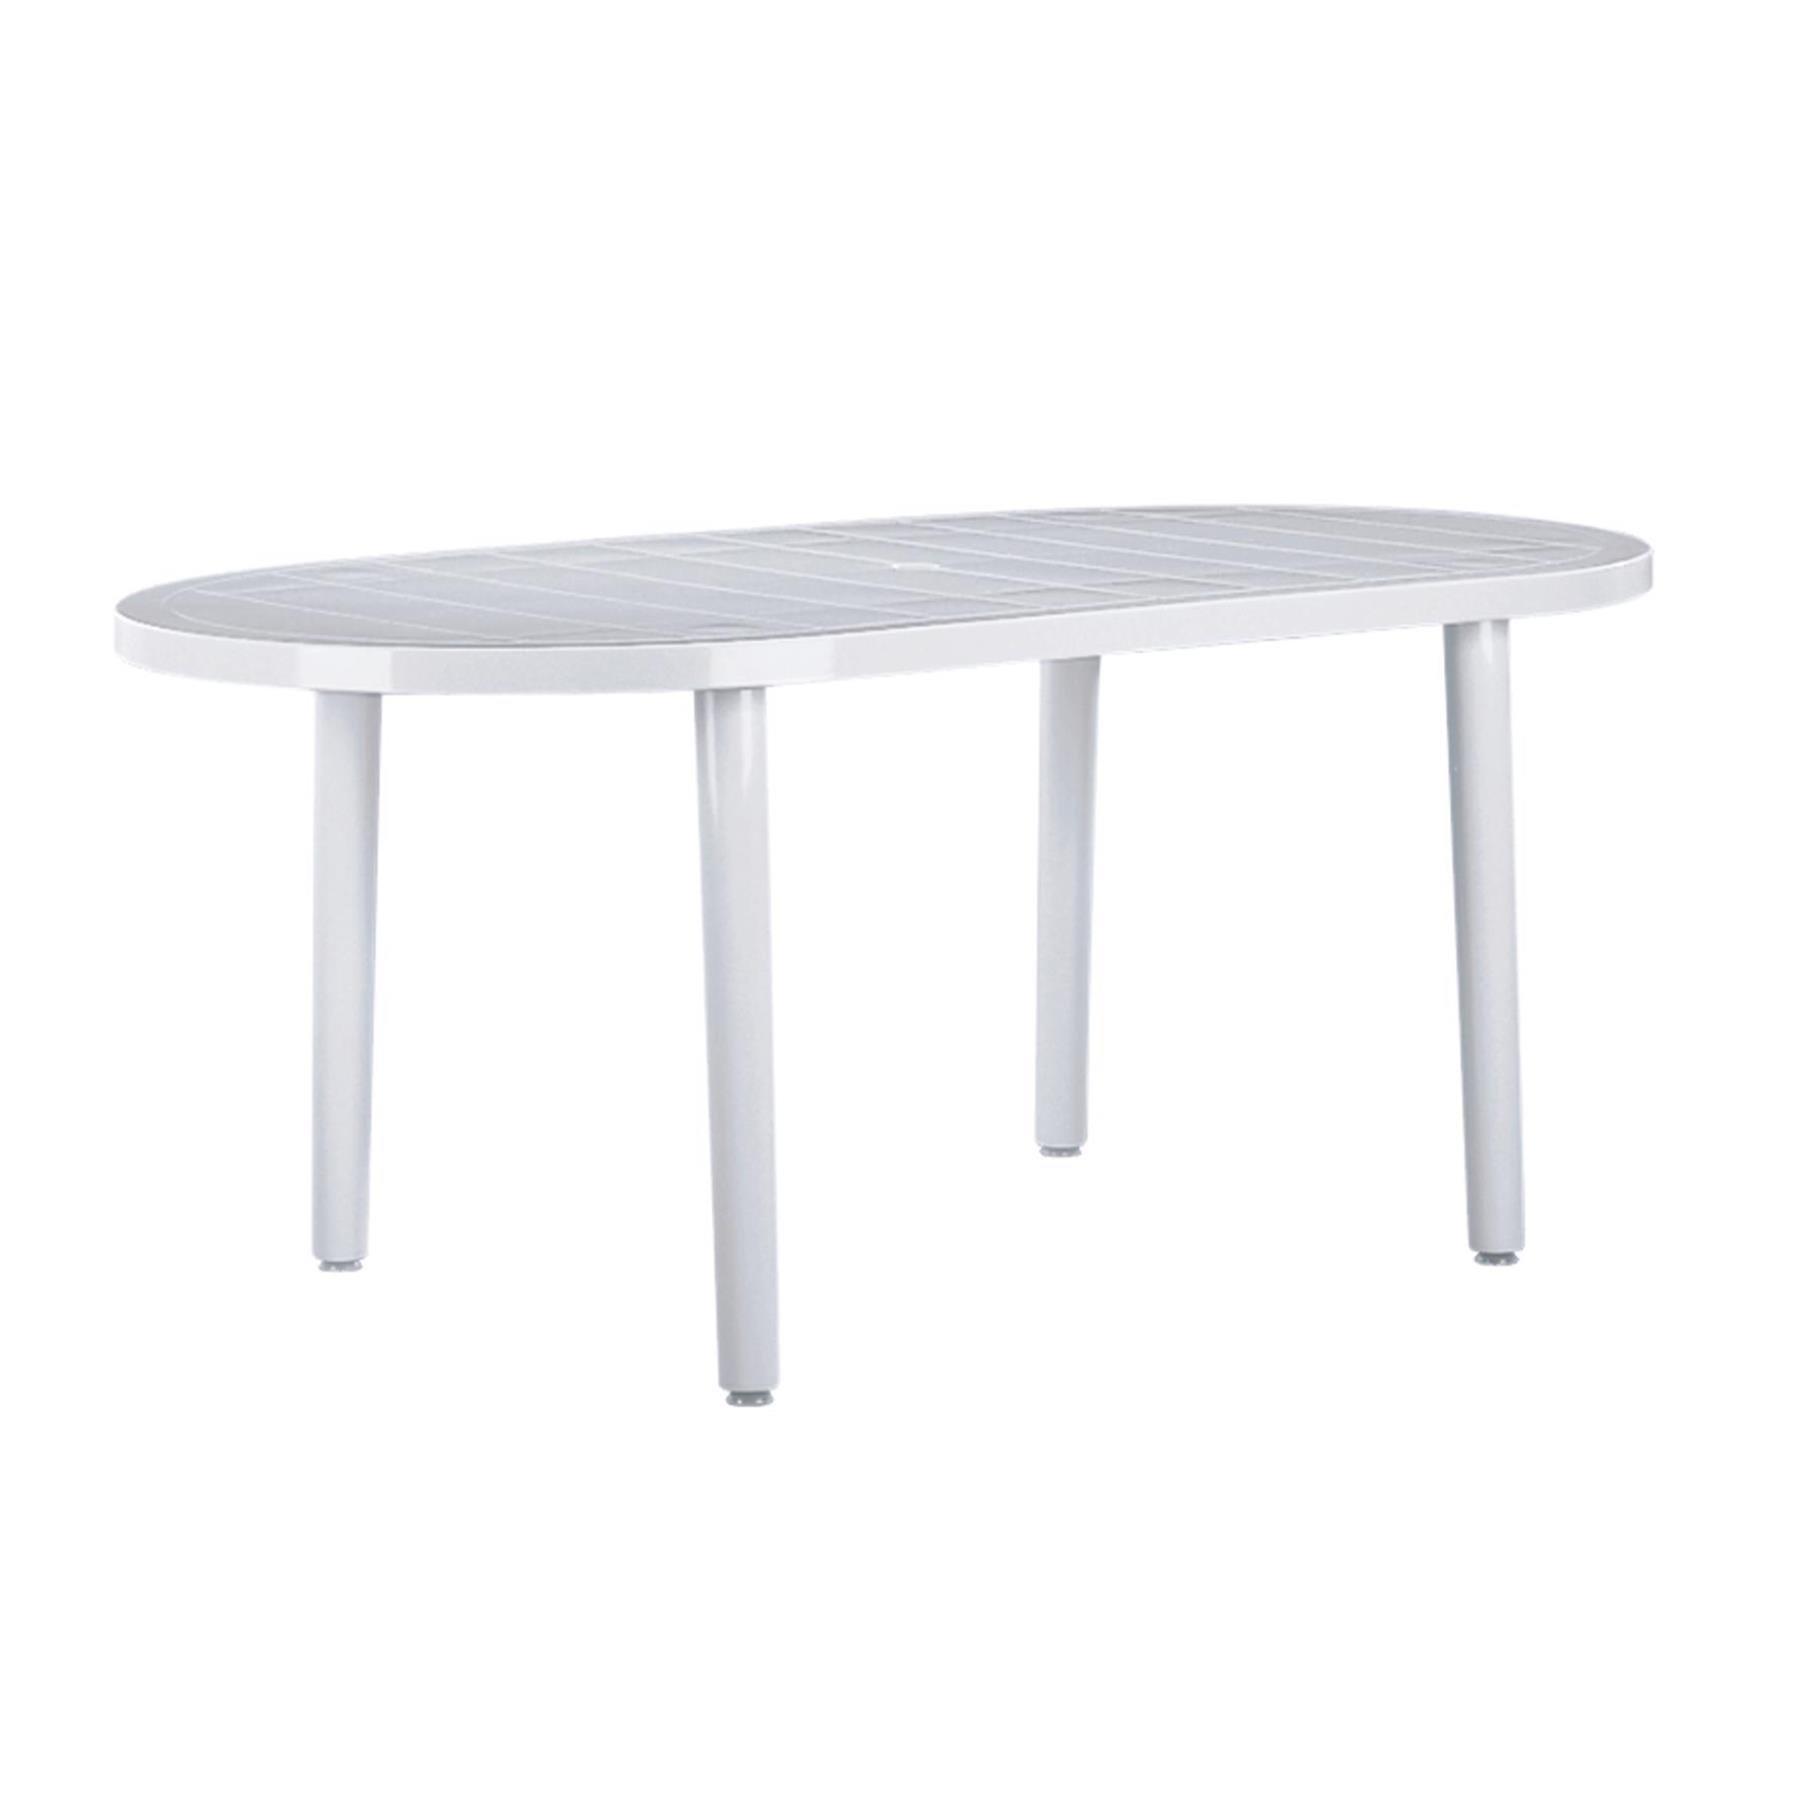 6 Seater Brava Oval Plastic Garden Dining Table 90cm x 180cm White